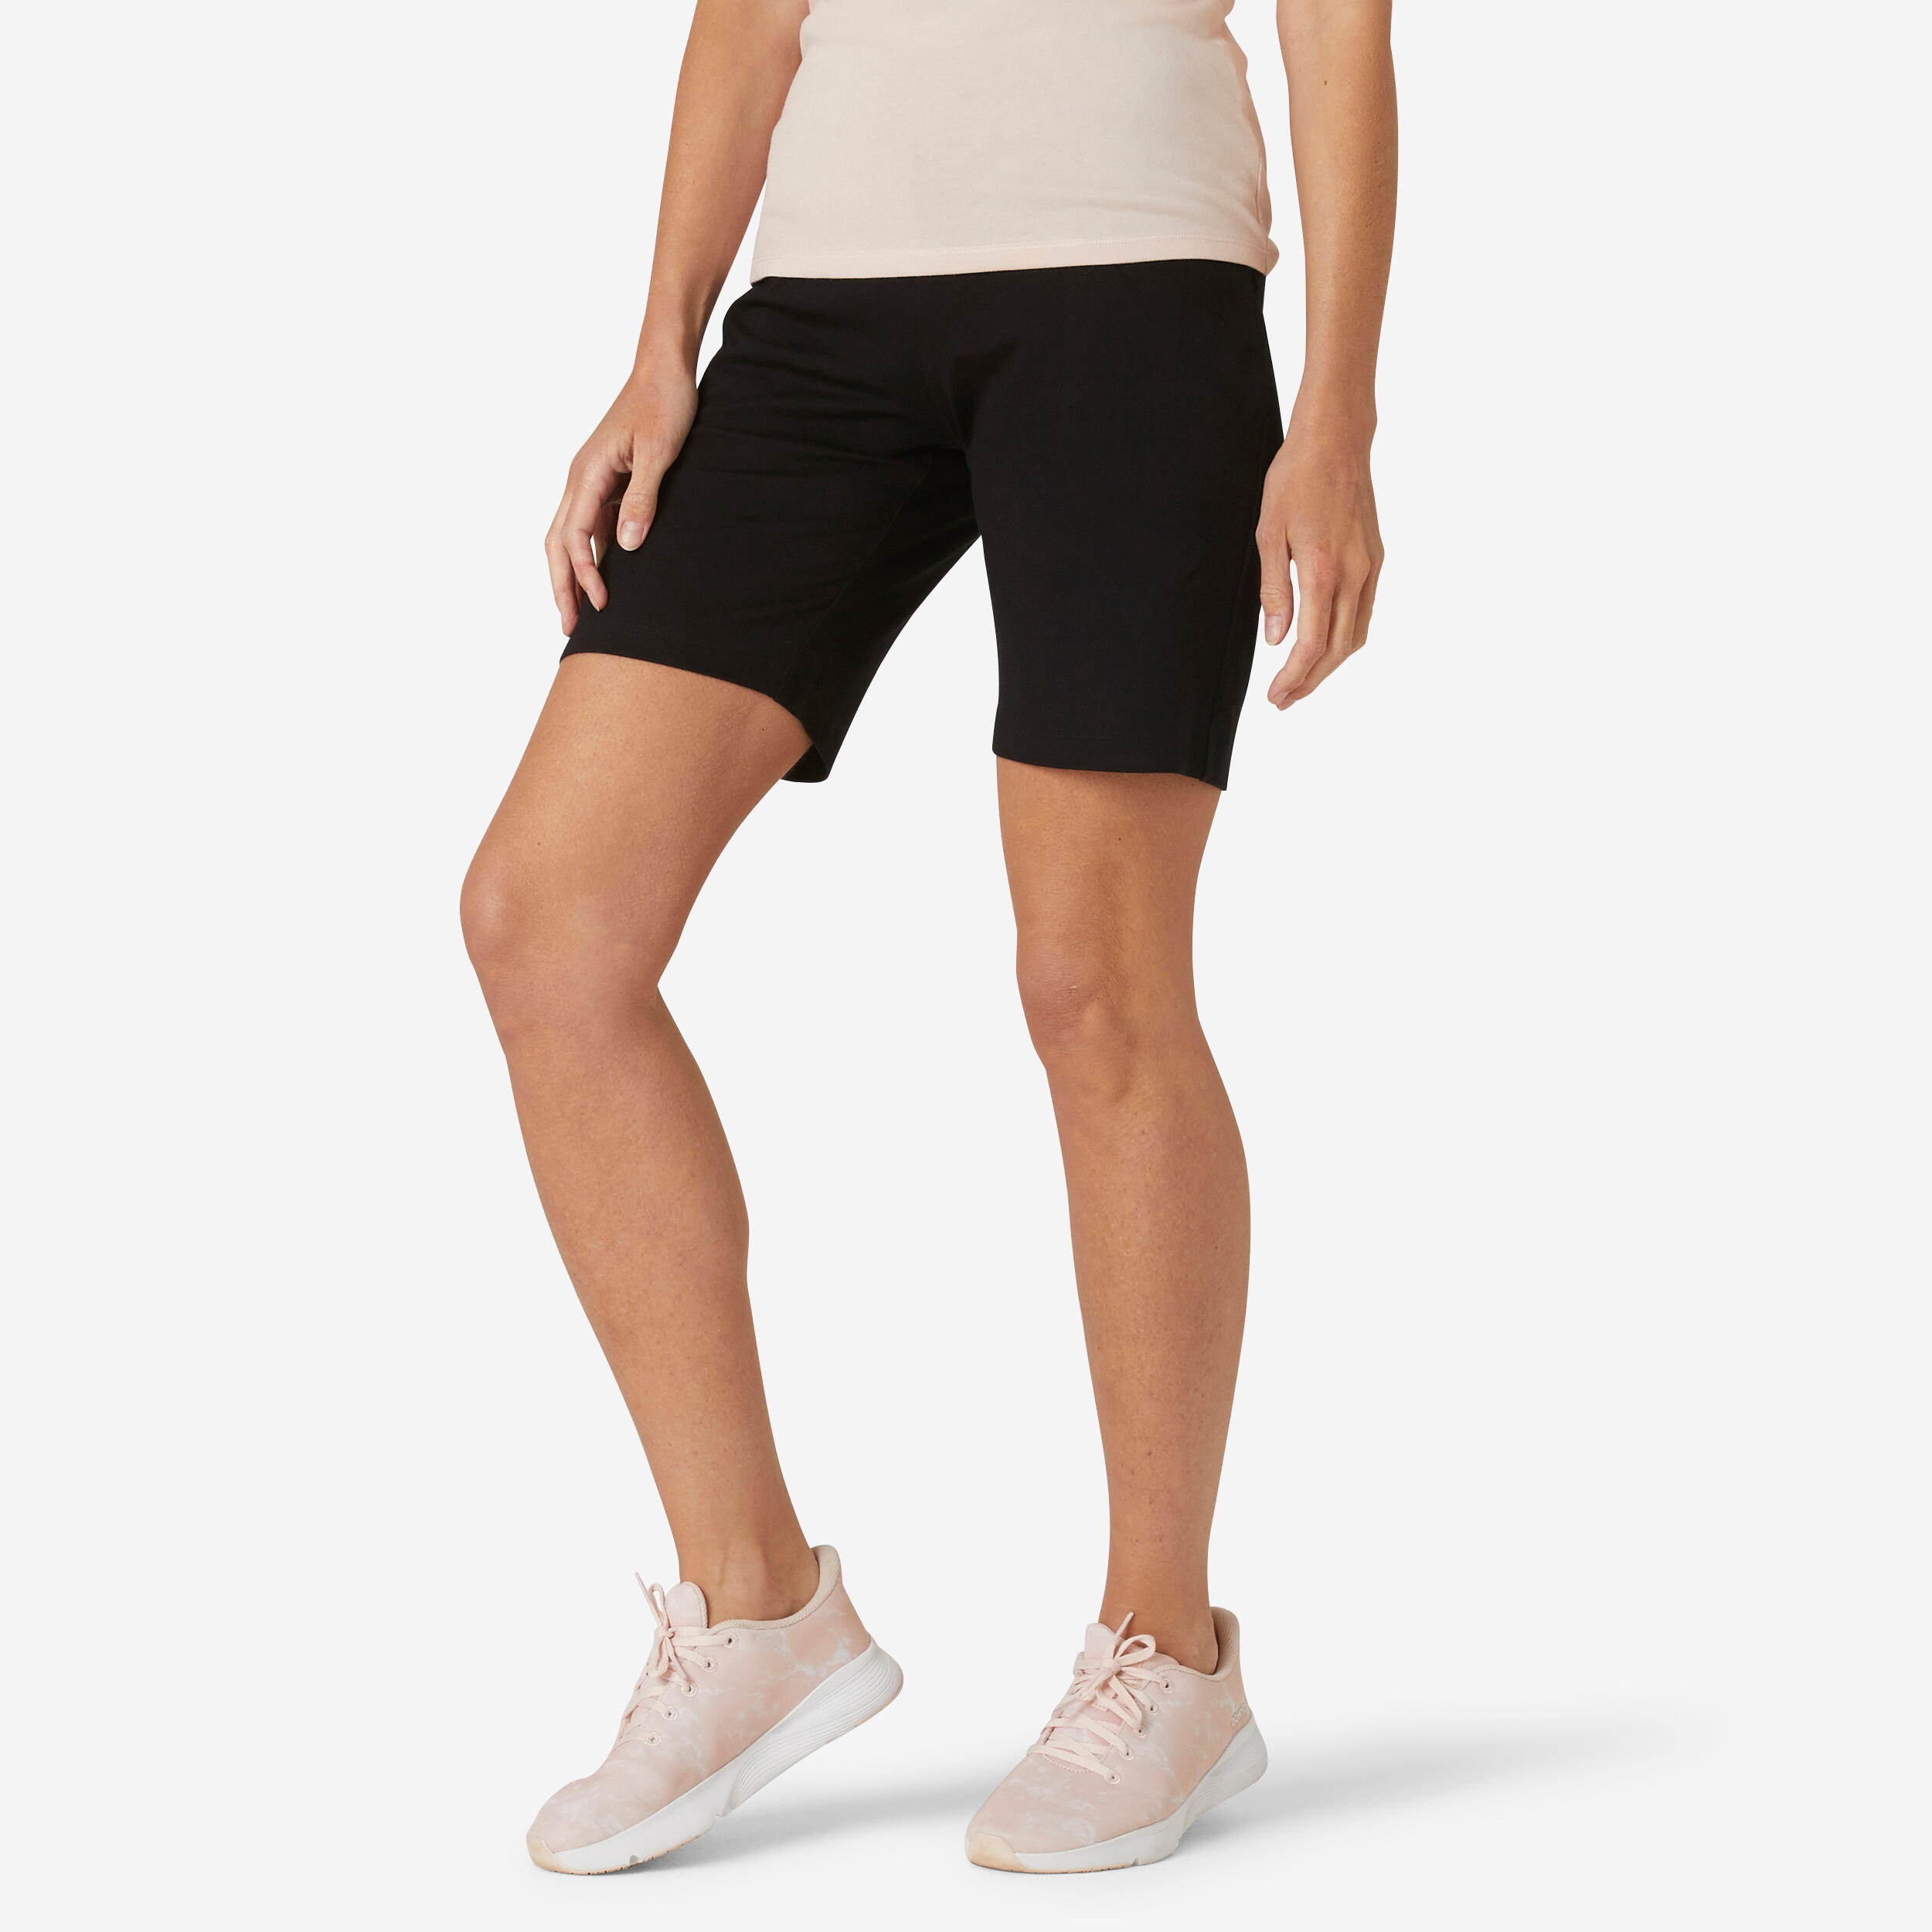 DOMYOS Women's Straight-Cut Fitness Shorts with Pockets 500 - Black